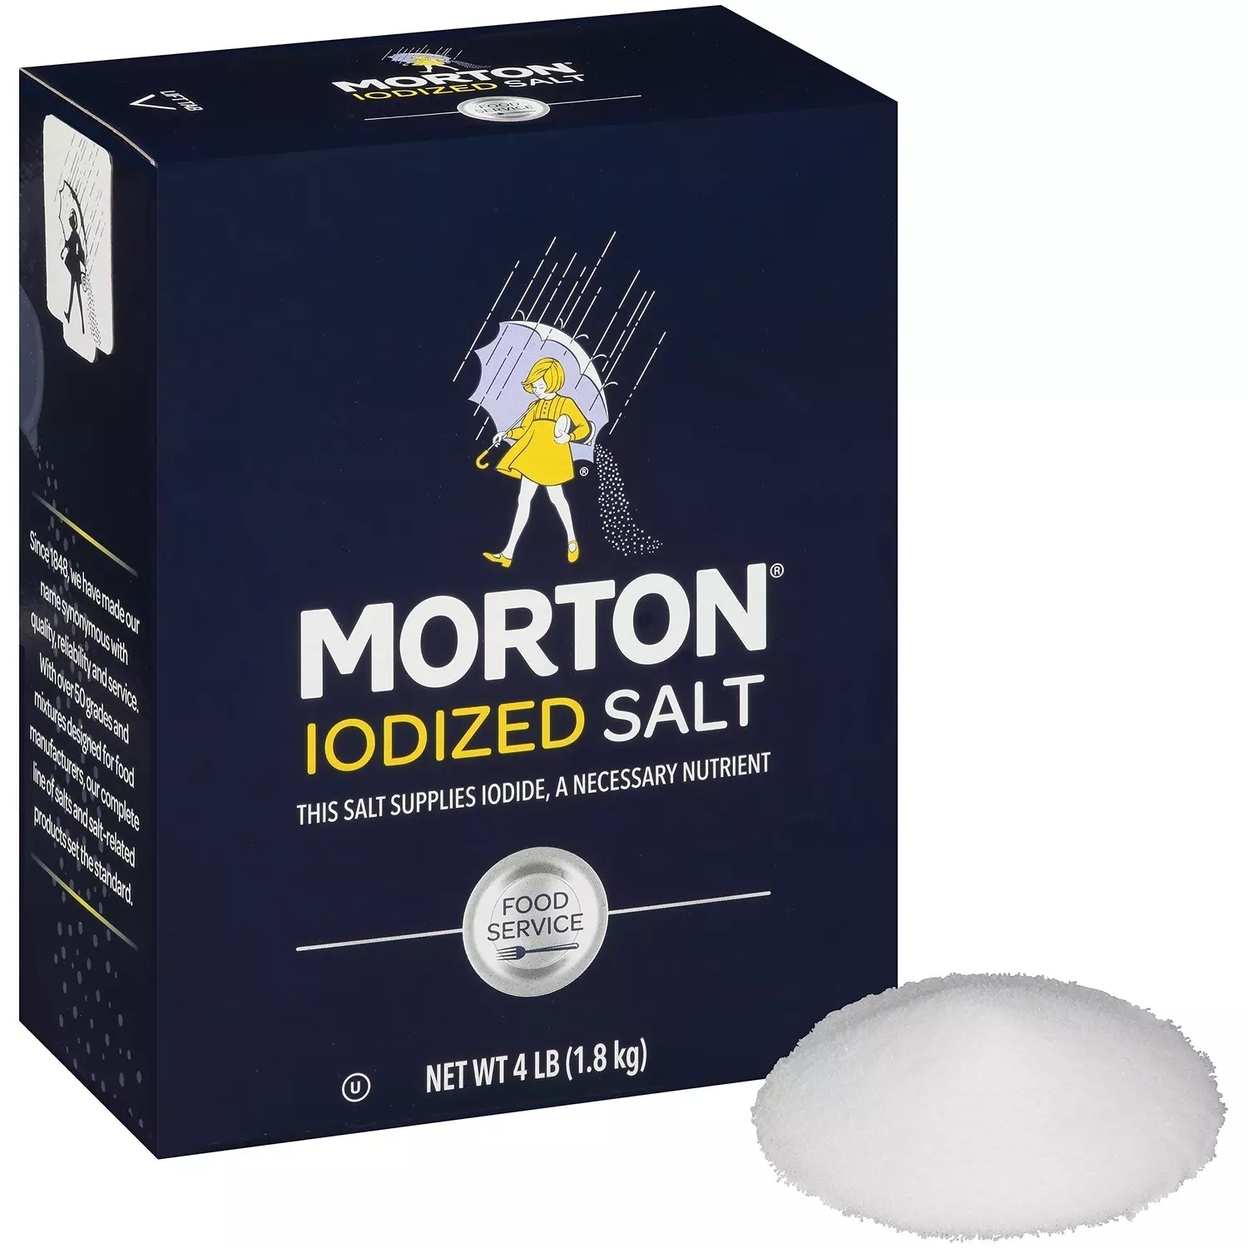 Morton Iodized Table Salt - 4 Pound Box